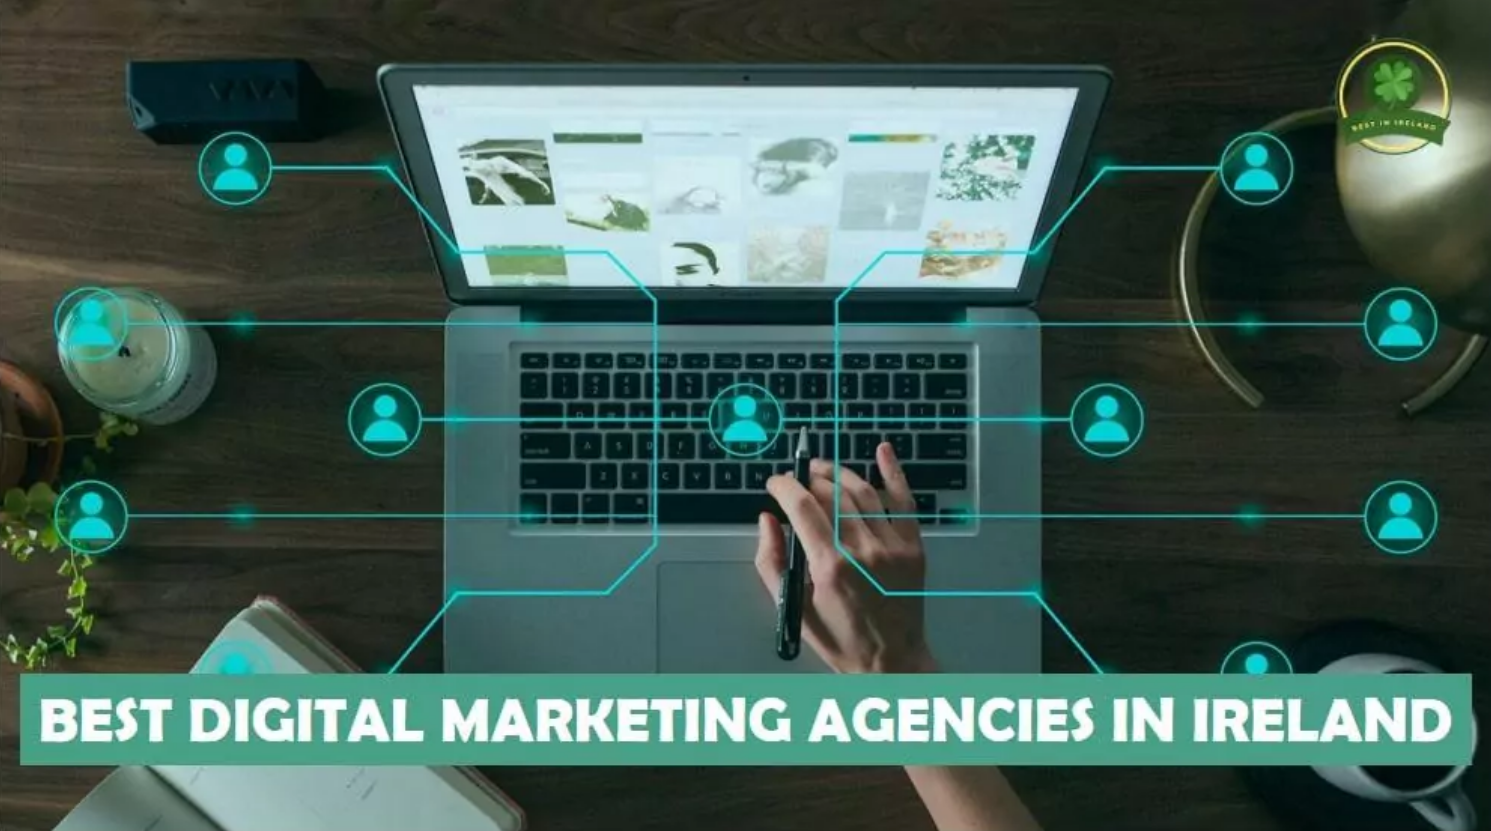 Digital Sales profiled first on ‘The 14 Best Digital Marketing Agencies in Ireland’